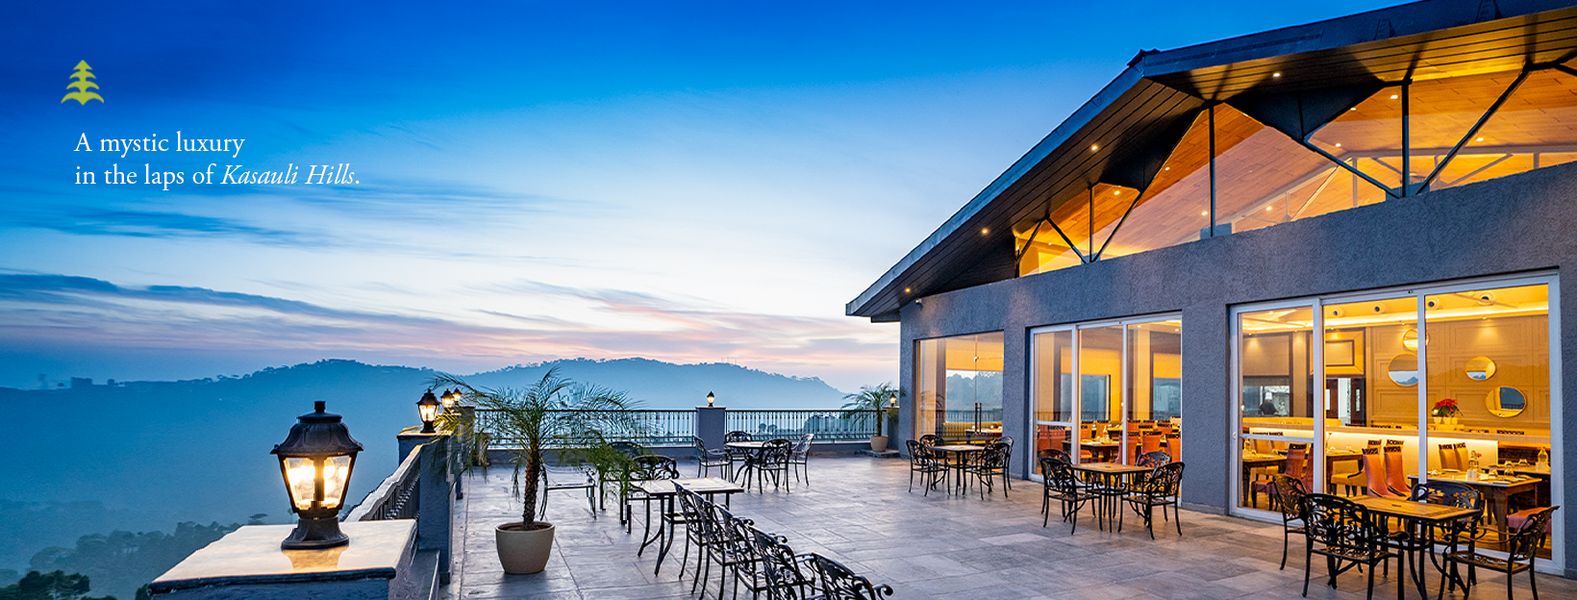 Parv Vilas Resort – A Luxury Haven with 5-Star amenities in Kasauli Hills, Solan